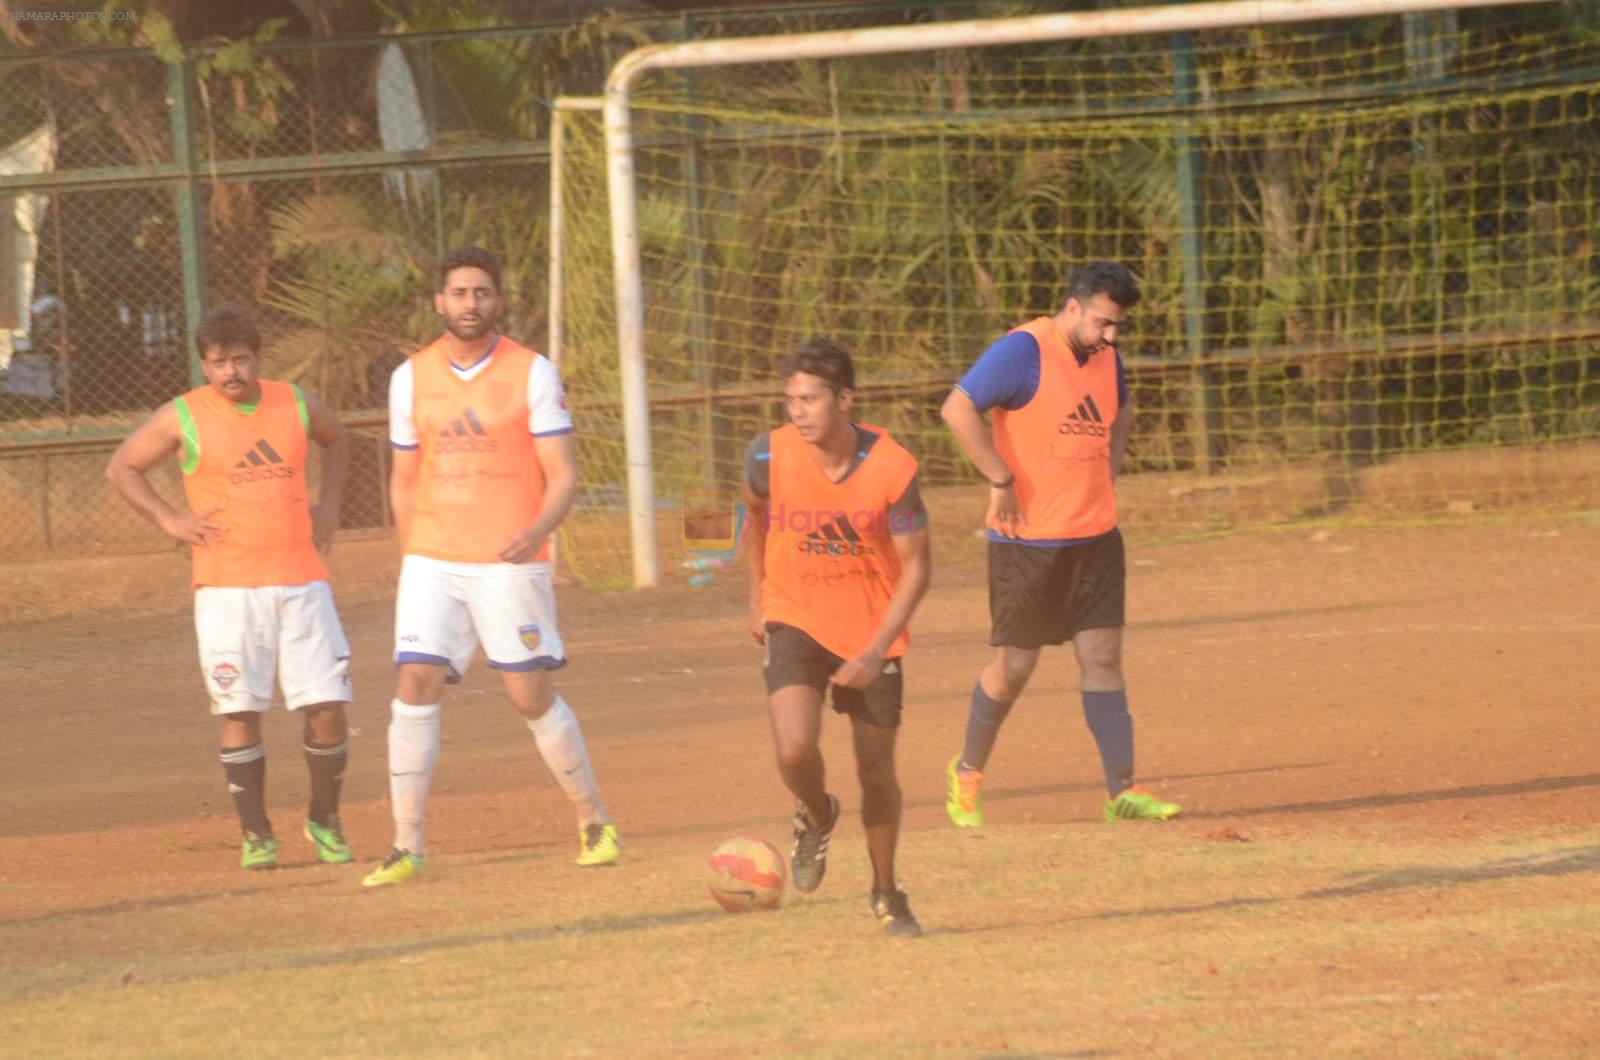 Ranbir Kapoor, Abhishek Bachchan snapped at soccer practise on 10th Jan 2016